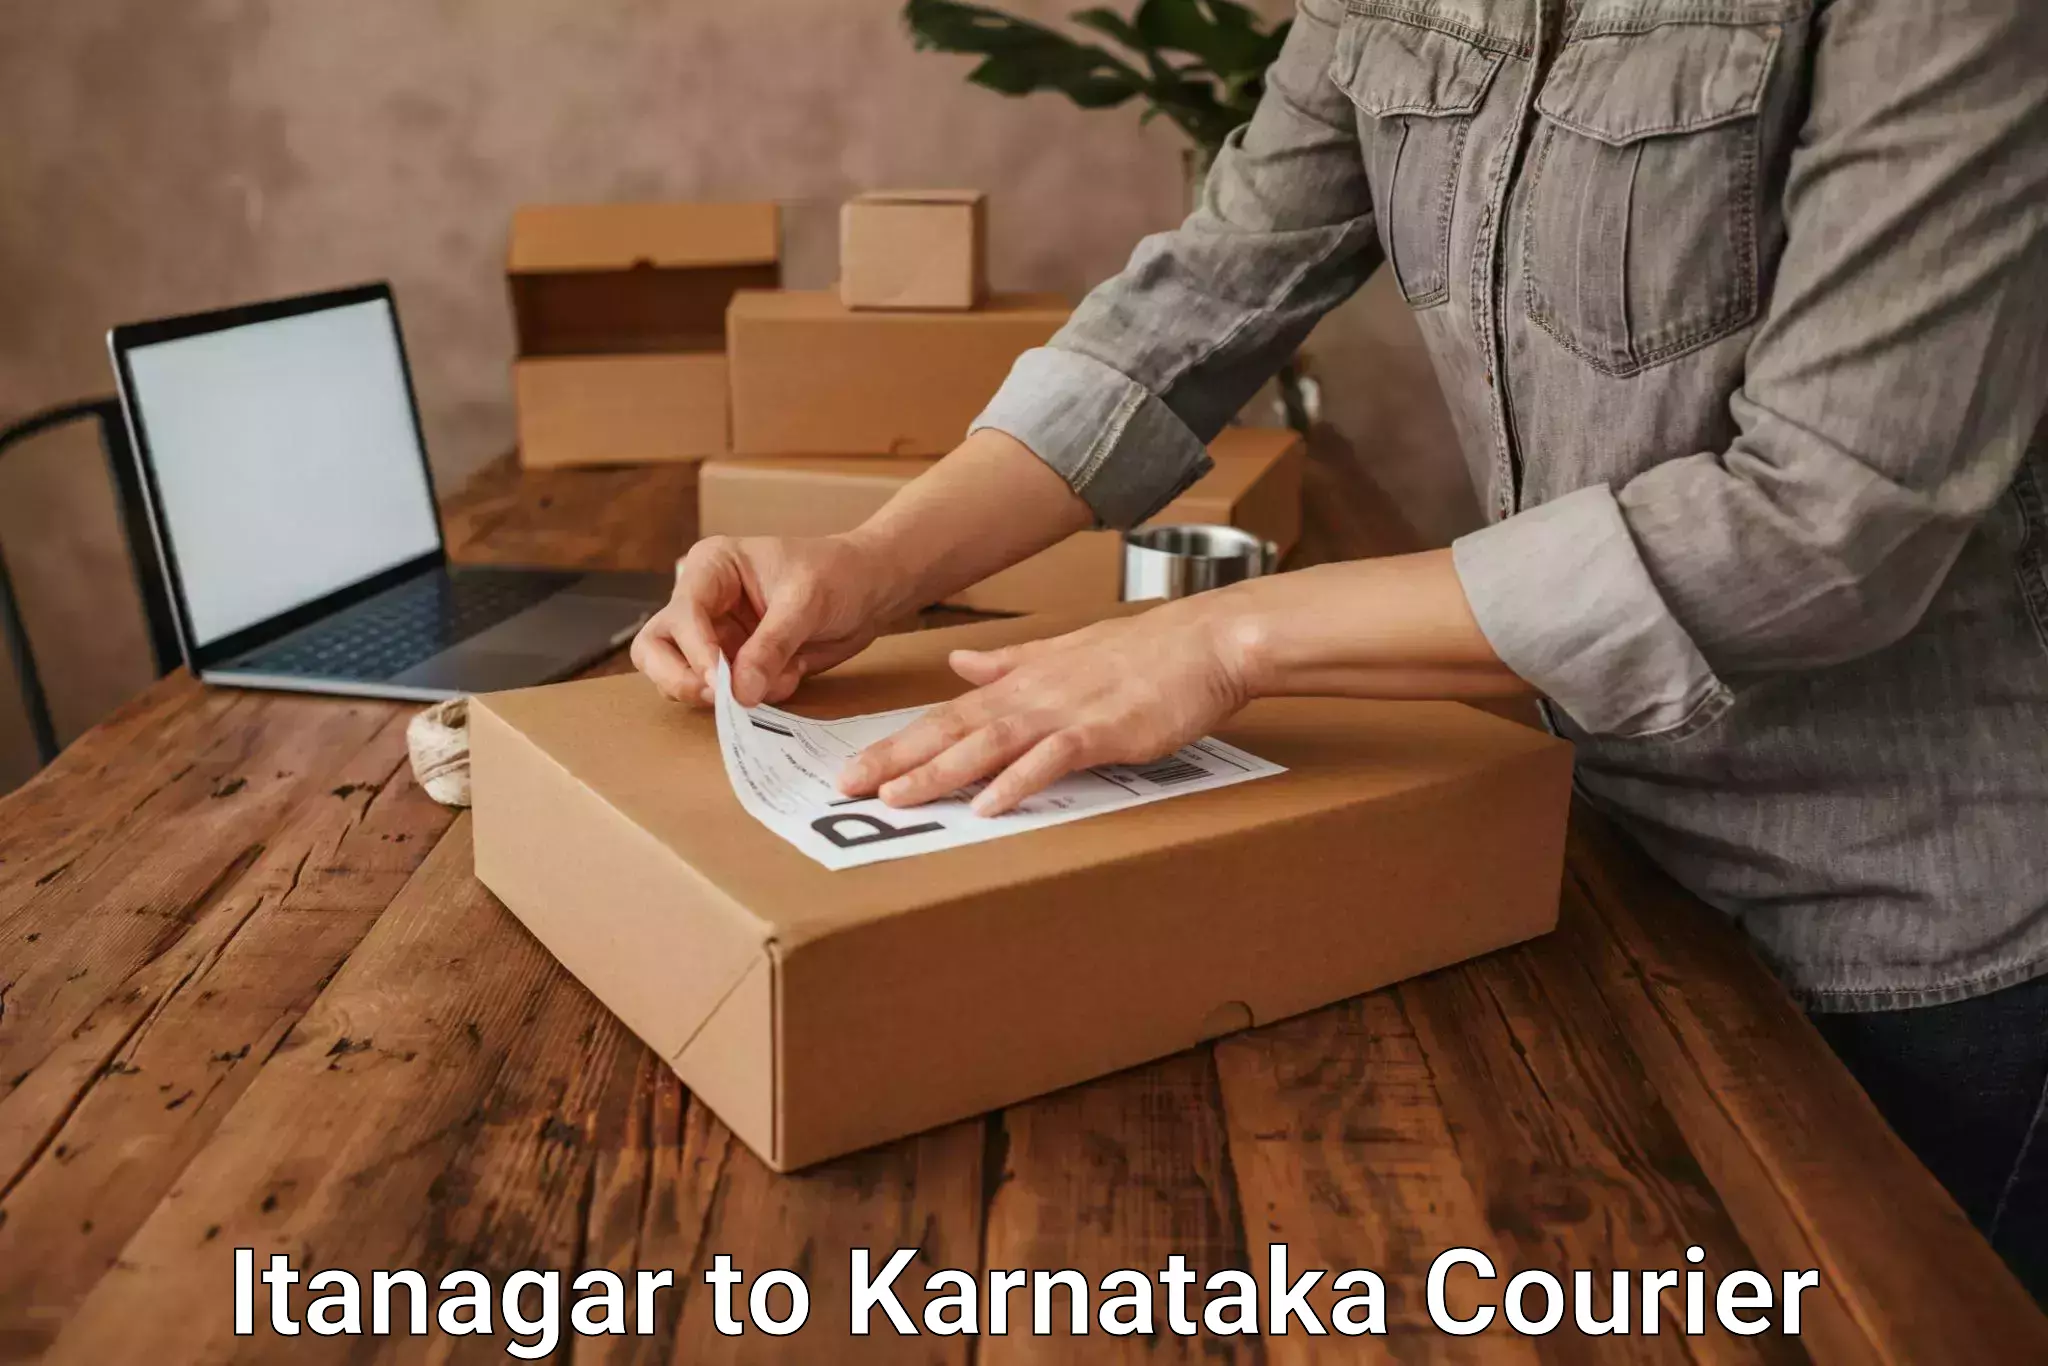 Cash on delivery service Itanagar to Anavatti